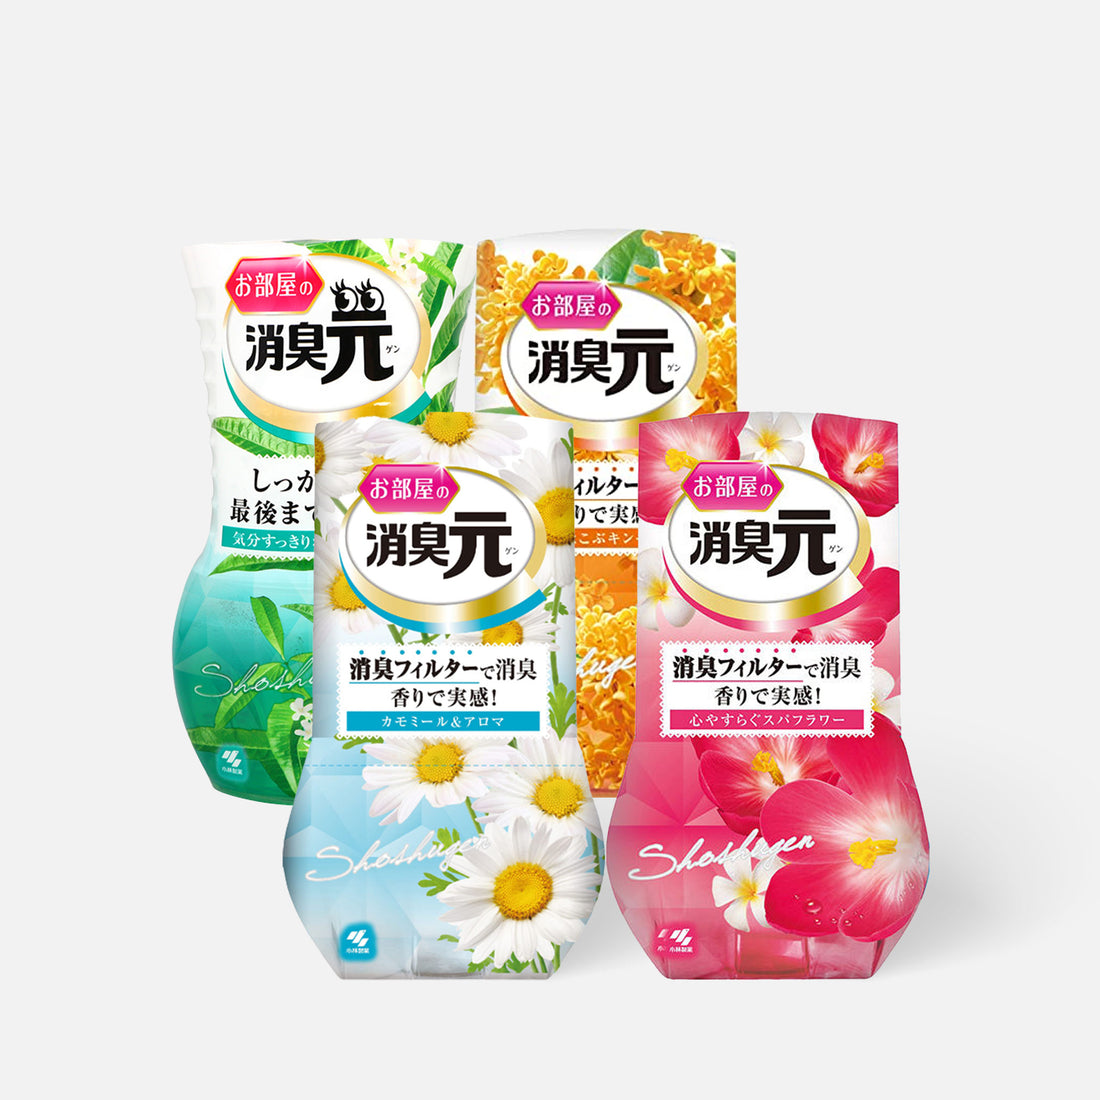 KOBAYASHI Pharmaceutical Room deodorant source 400ml